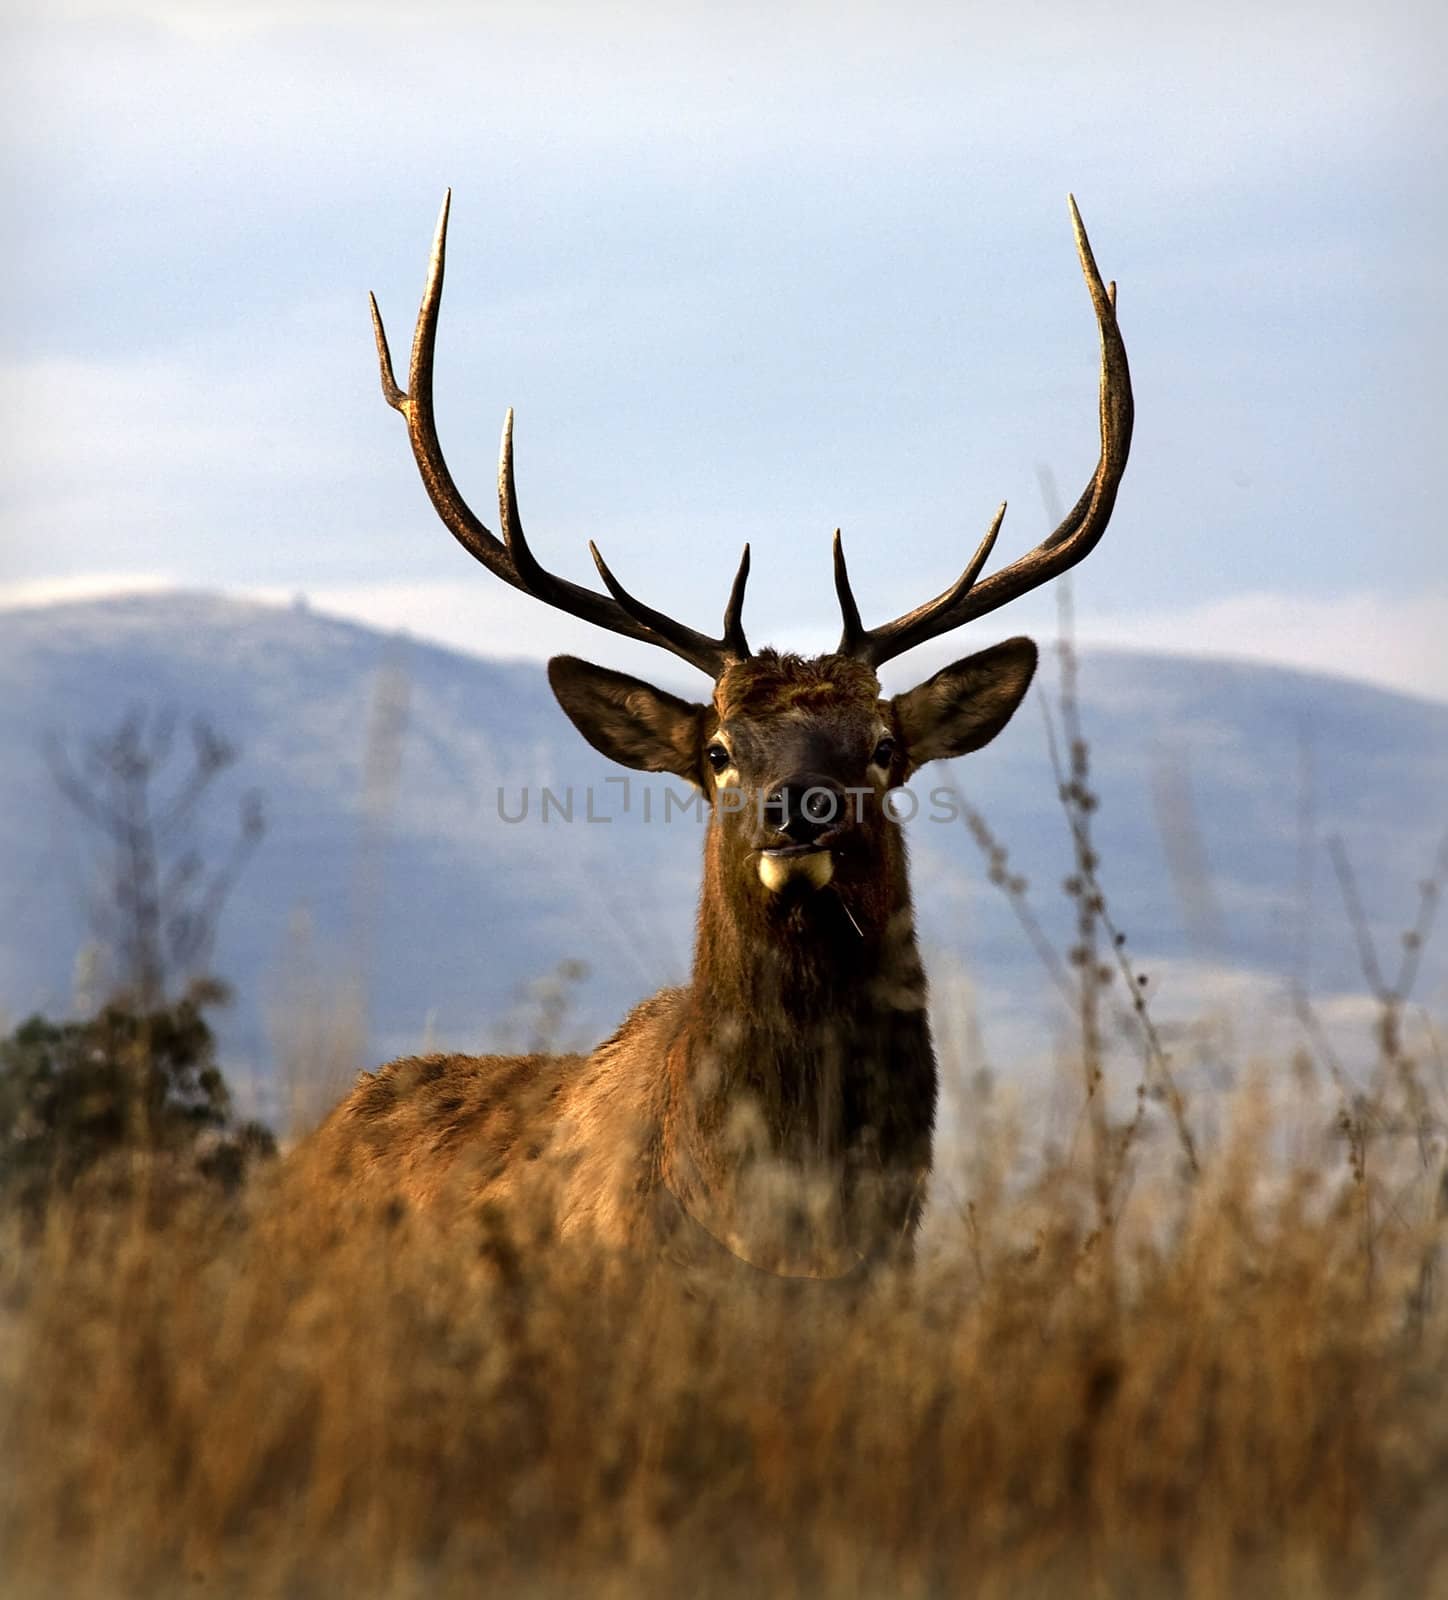 Big Elk with Large Rack of Horns National Bison Range Charlo Montana